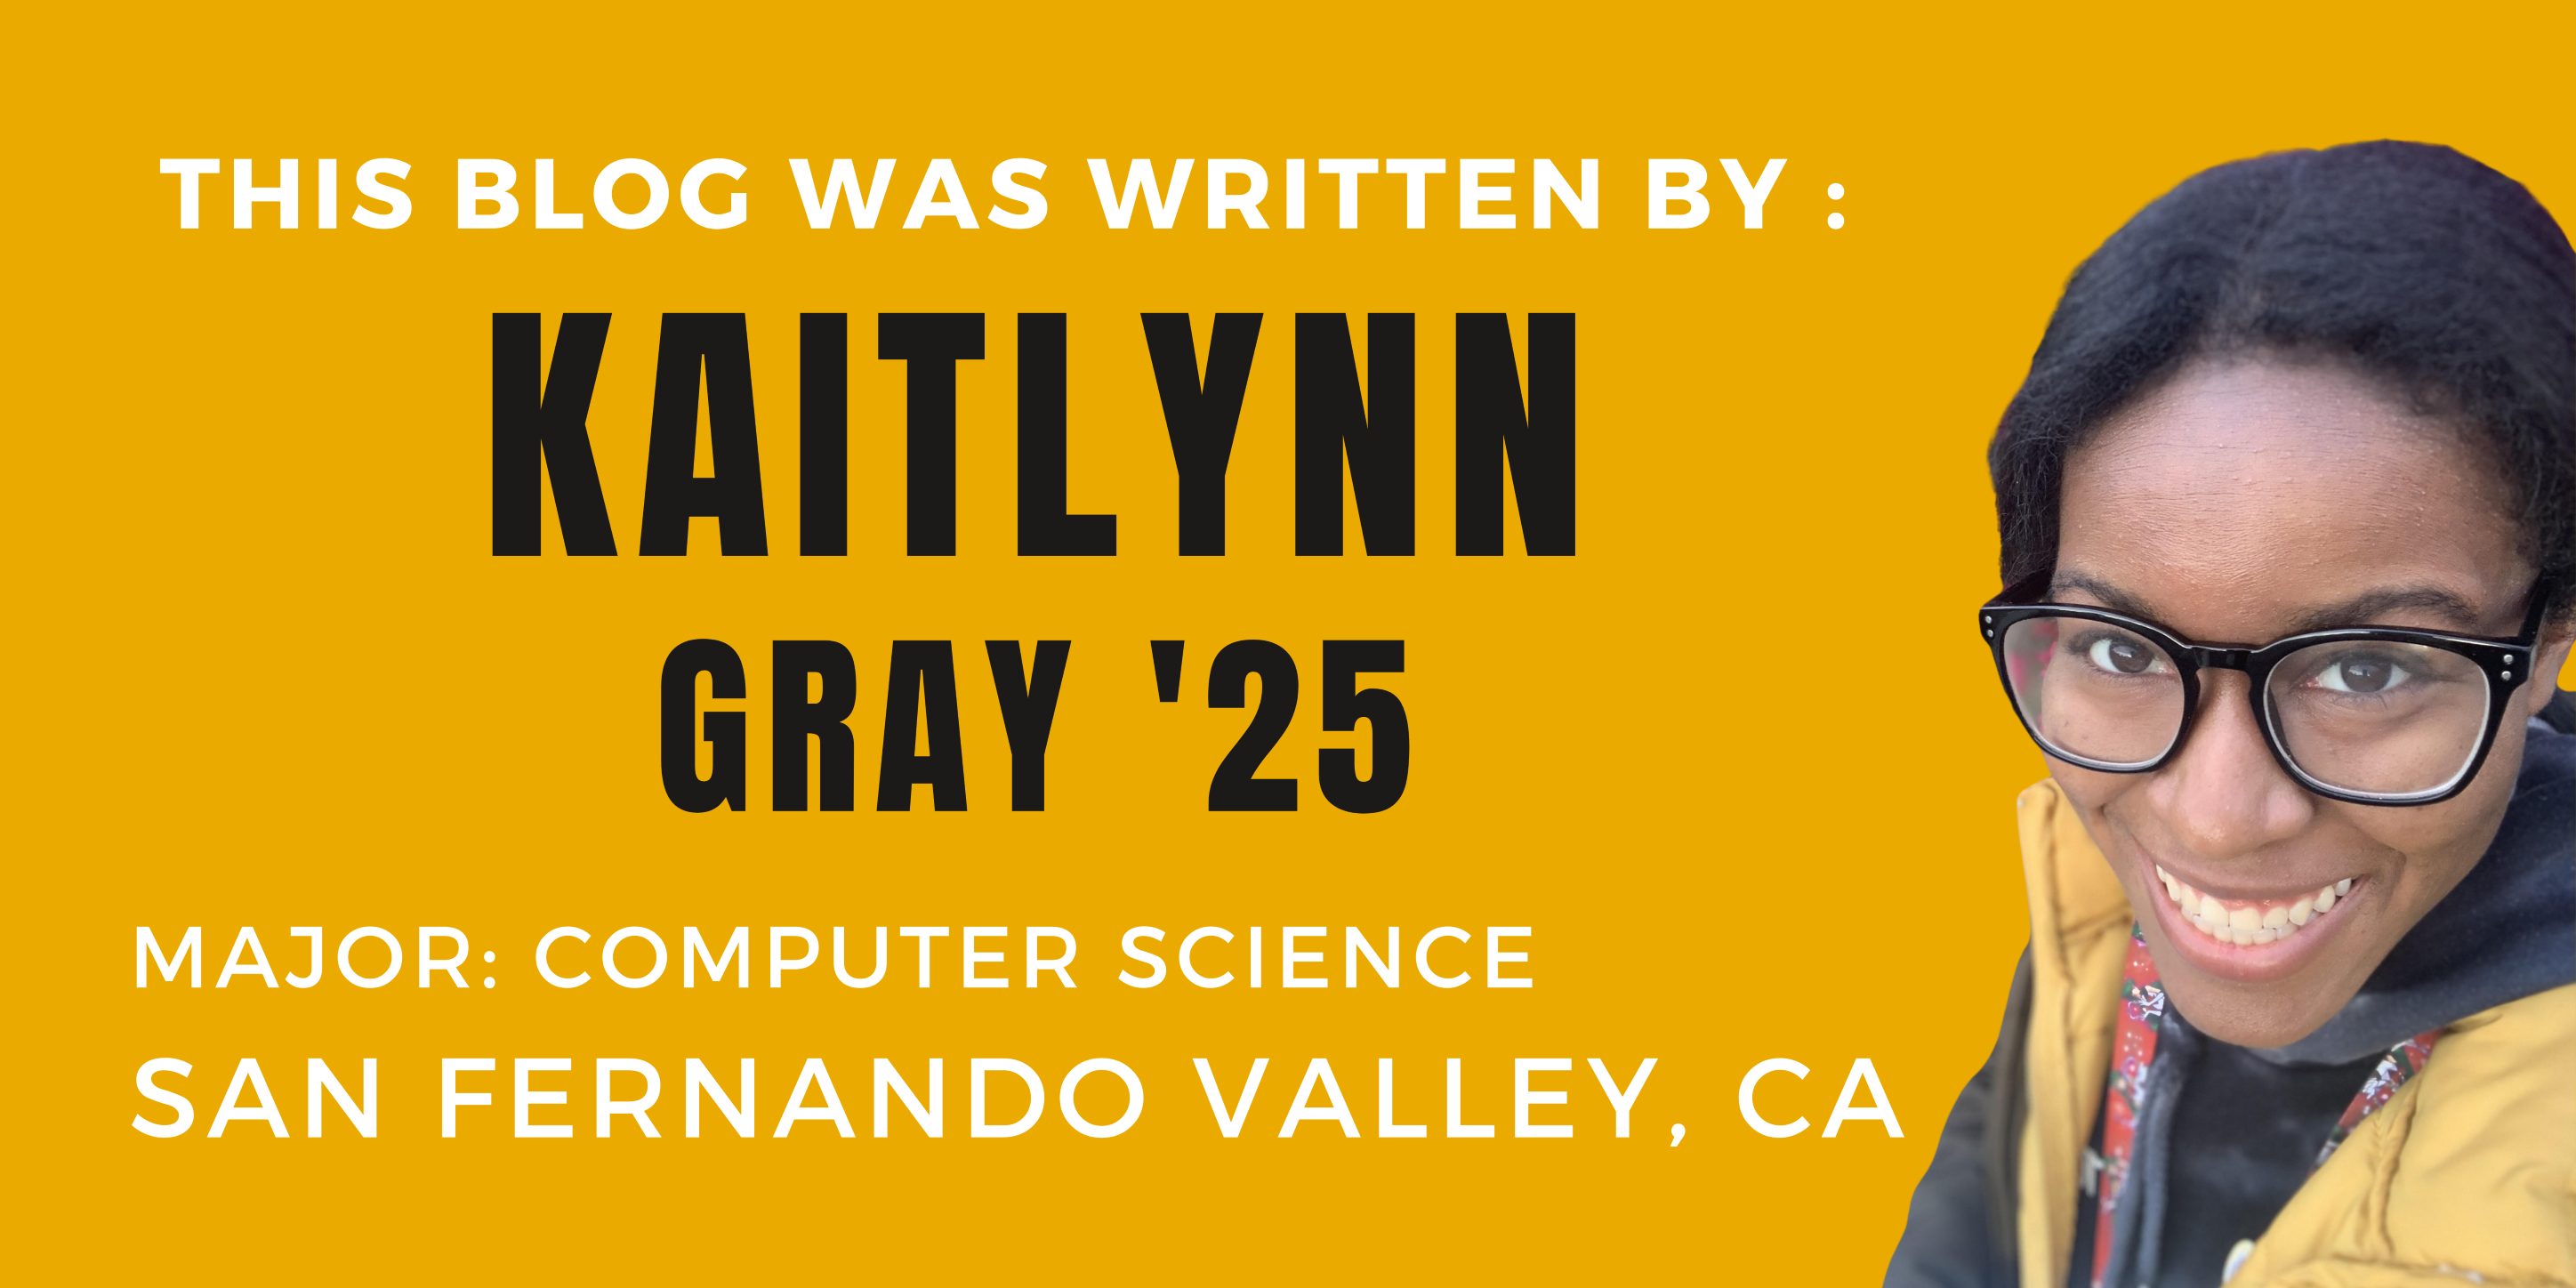 This blog was written by: Kaitlynn Gray '25. Major: Computer Science. San Fernando Valley, CA